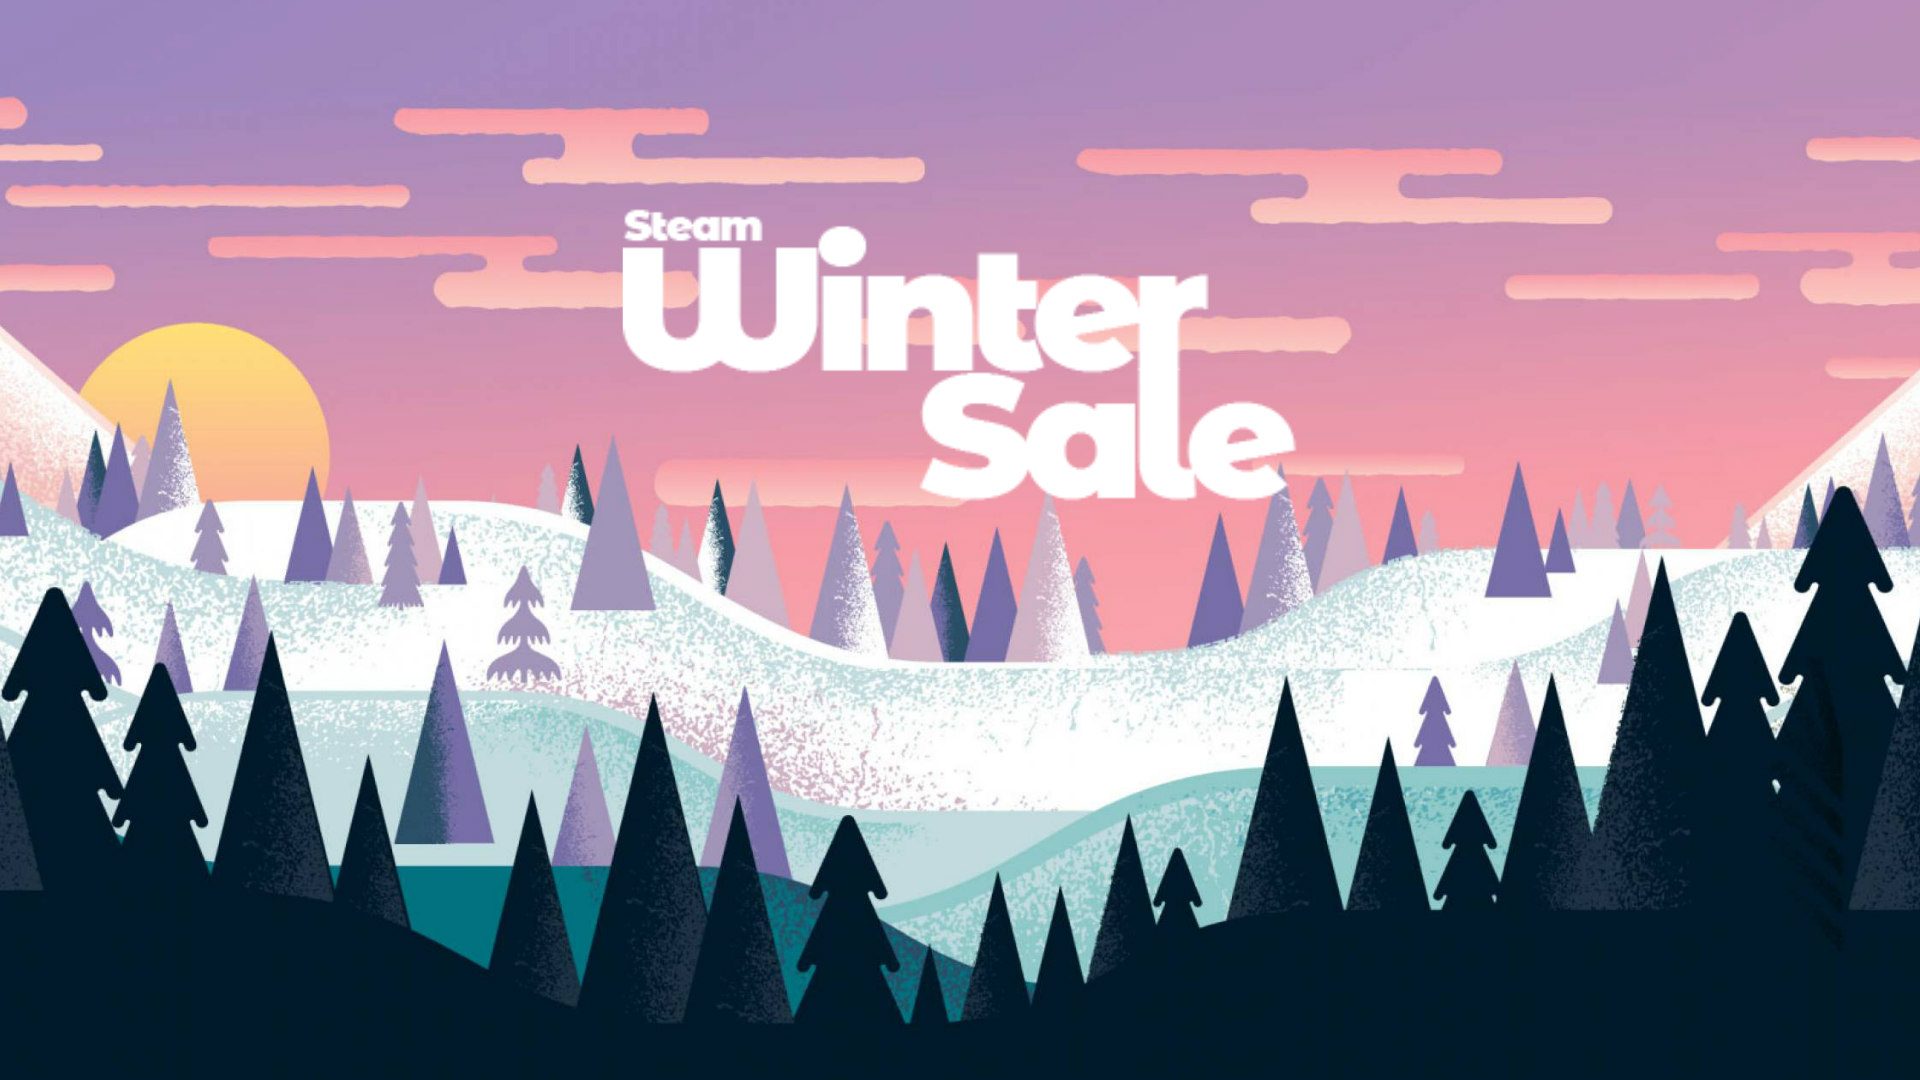 Steam Winter Sale Brings Discounts to 'HalfLife Alyx', 'Star Wars